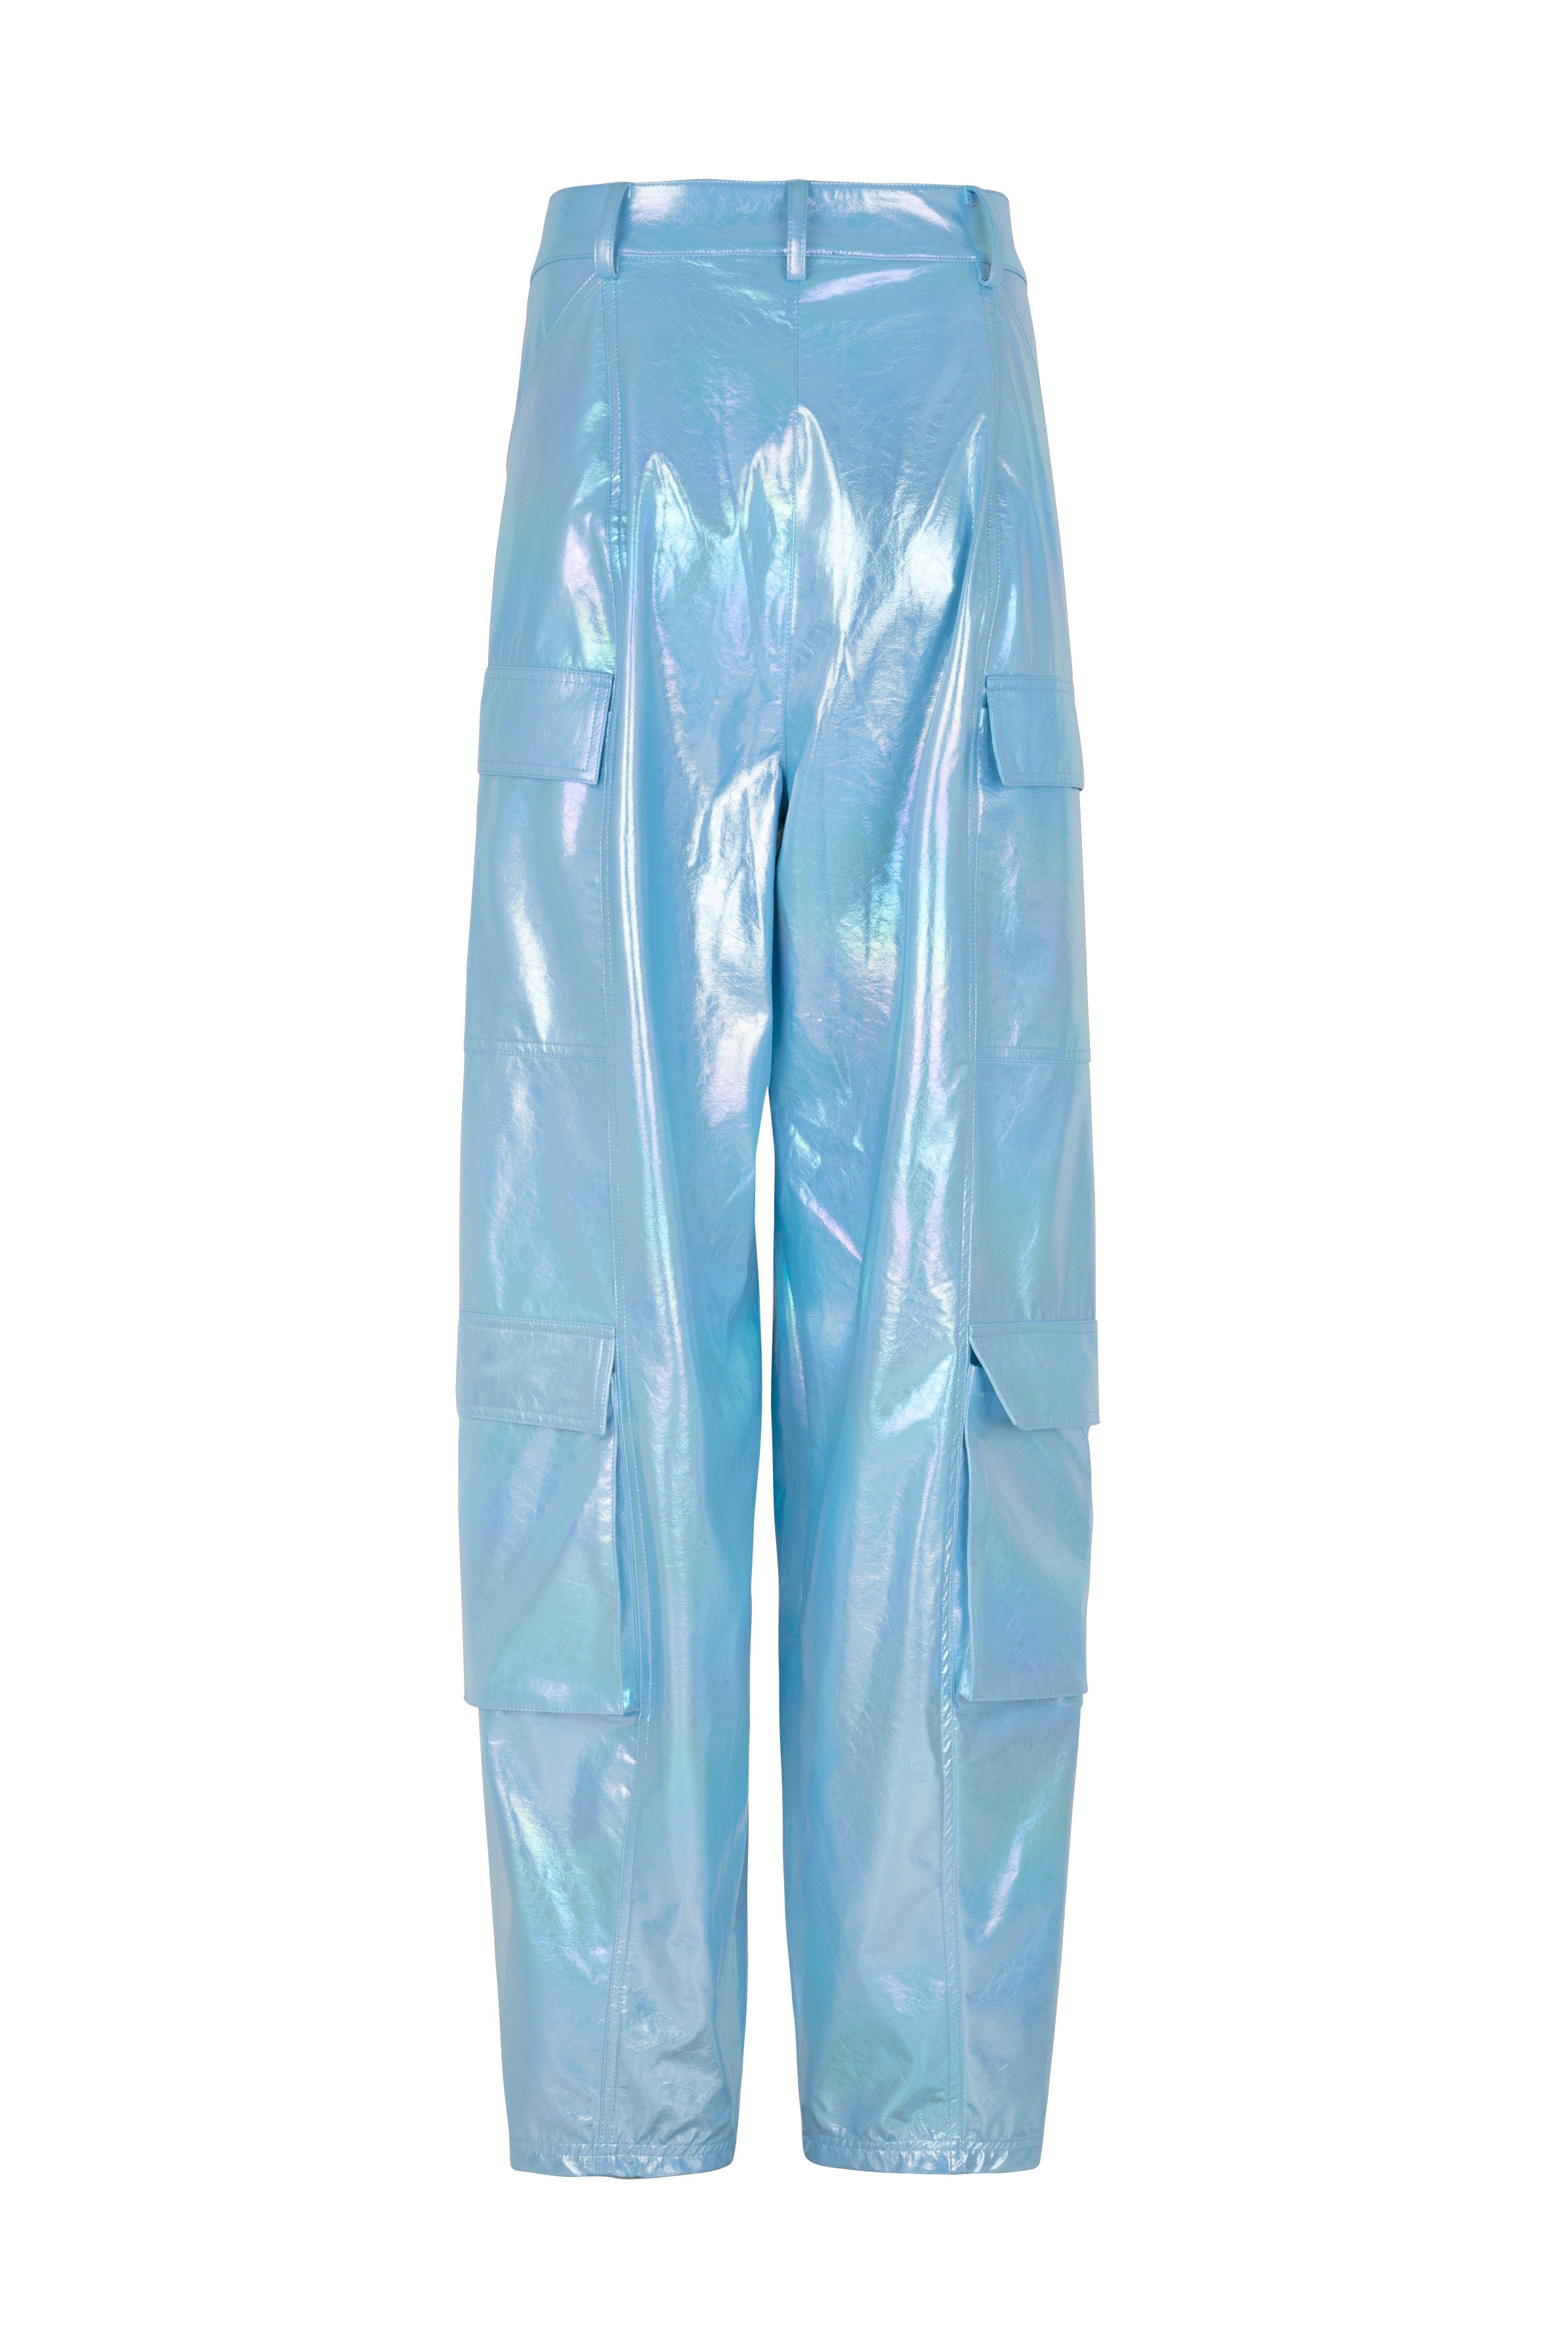 CRAS Light Pants Pants 7004 Iridescent Blue